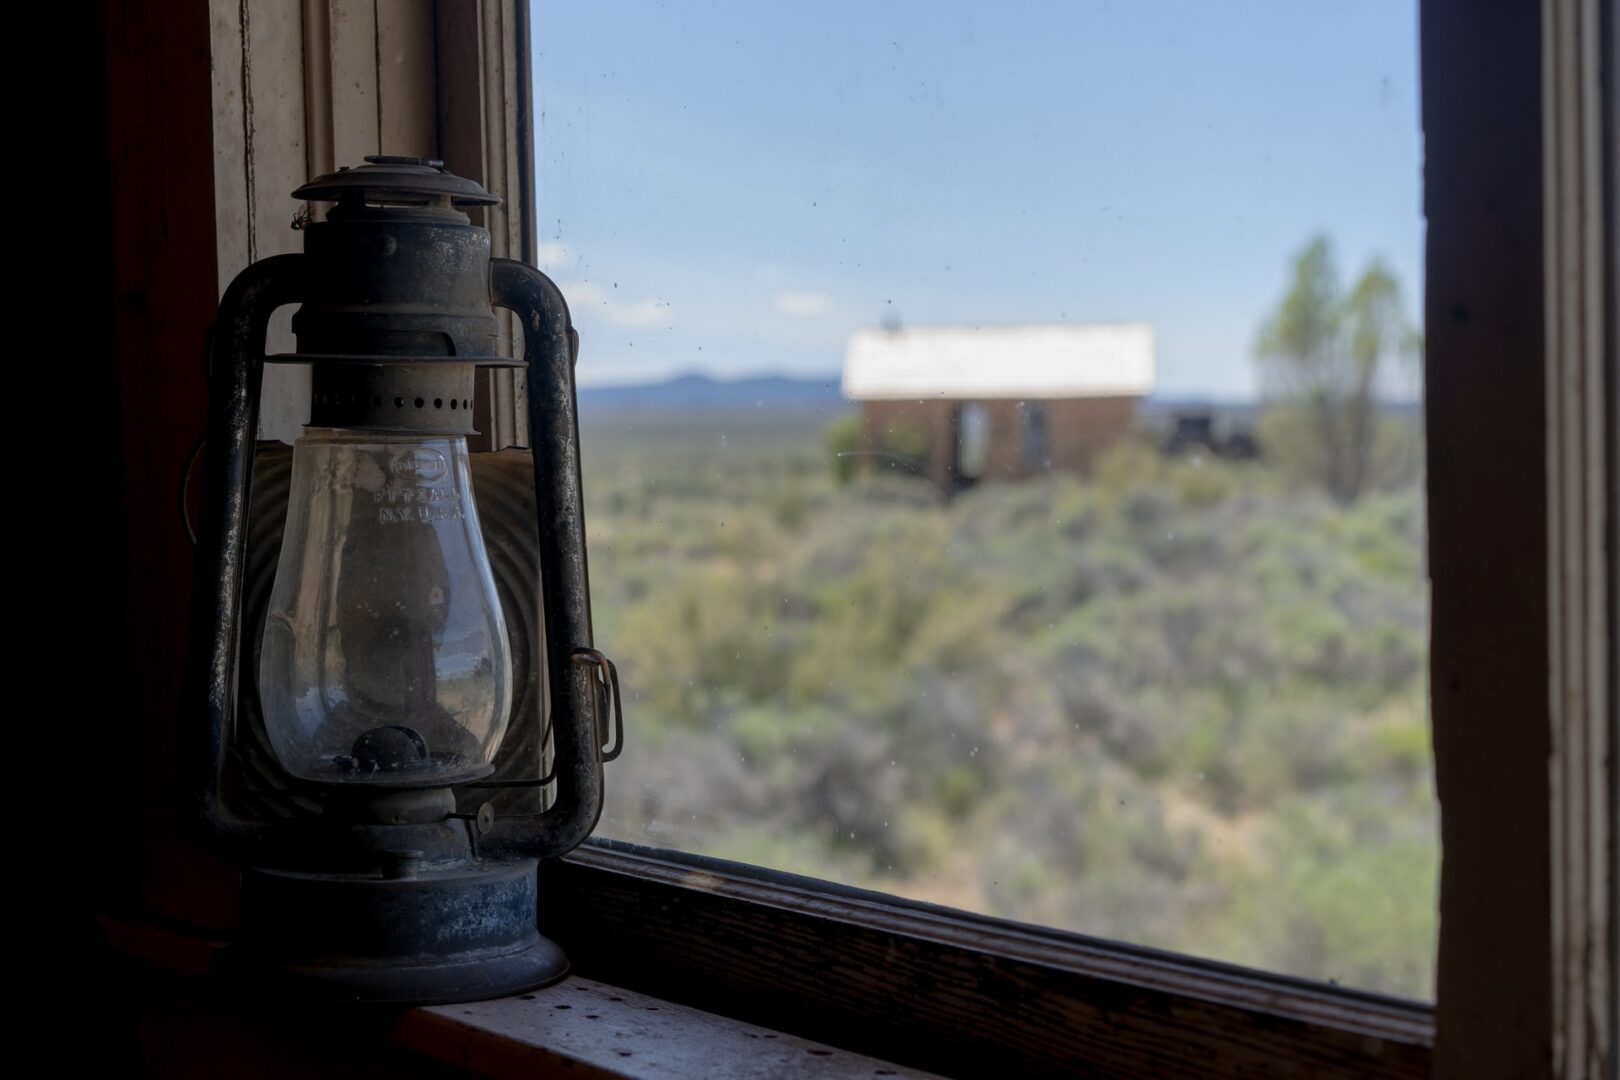 Gas lamp on a windowpane